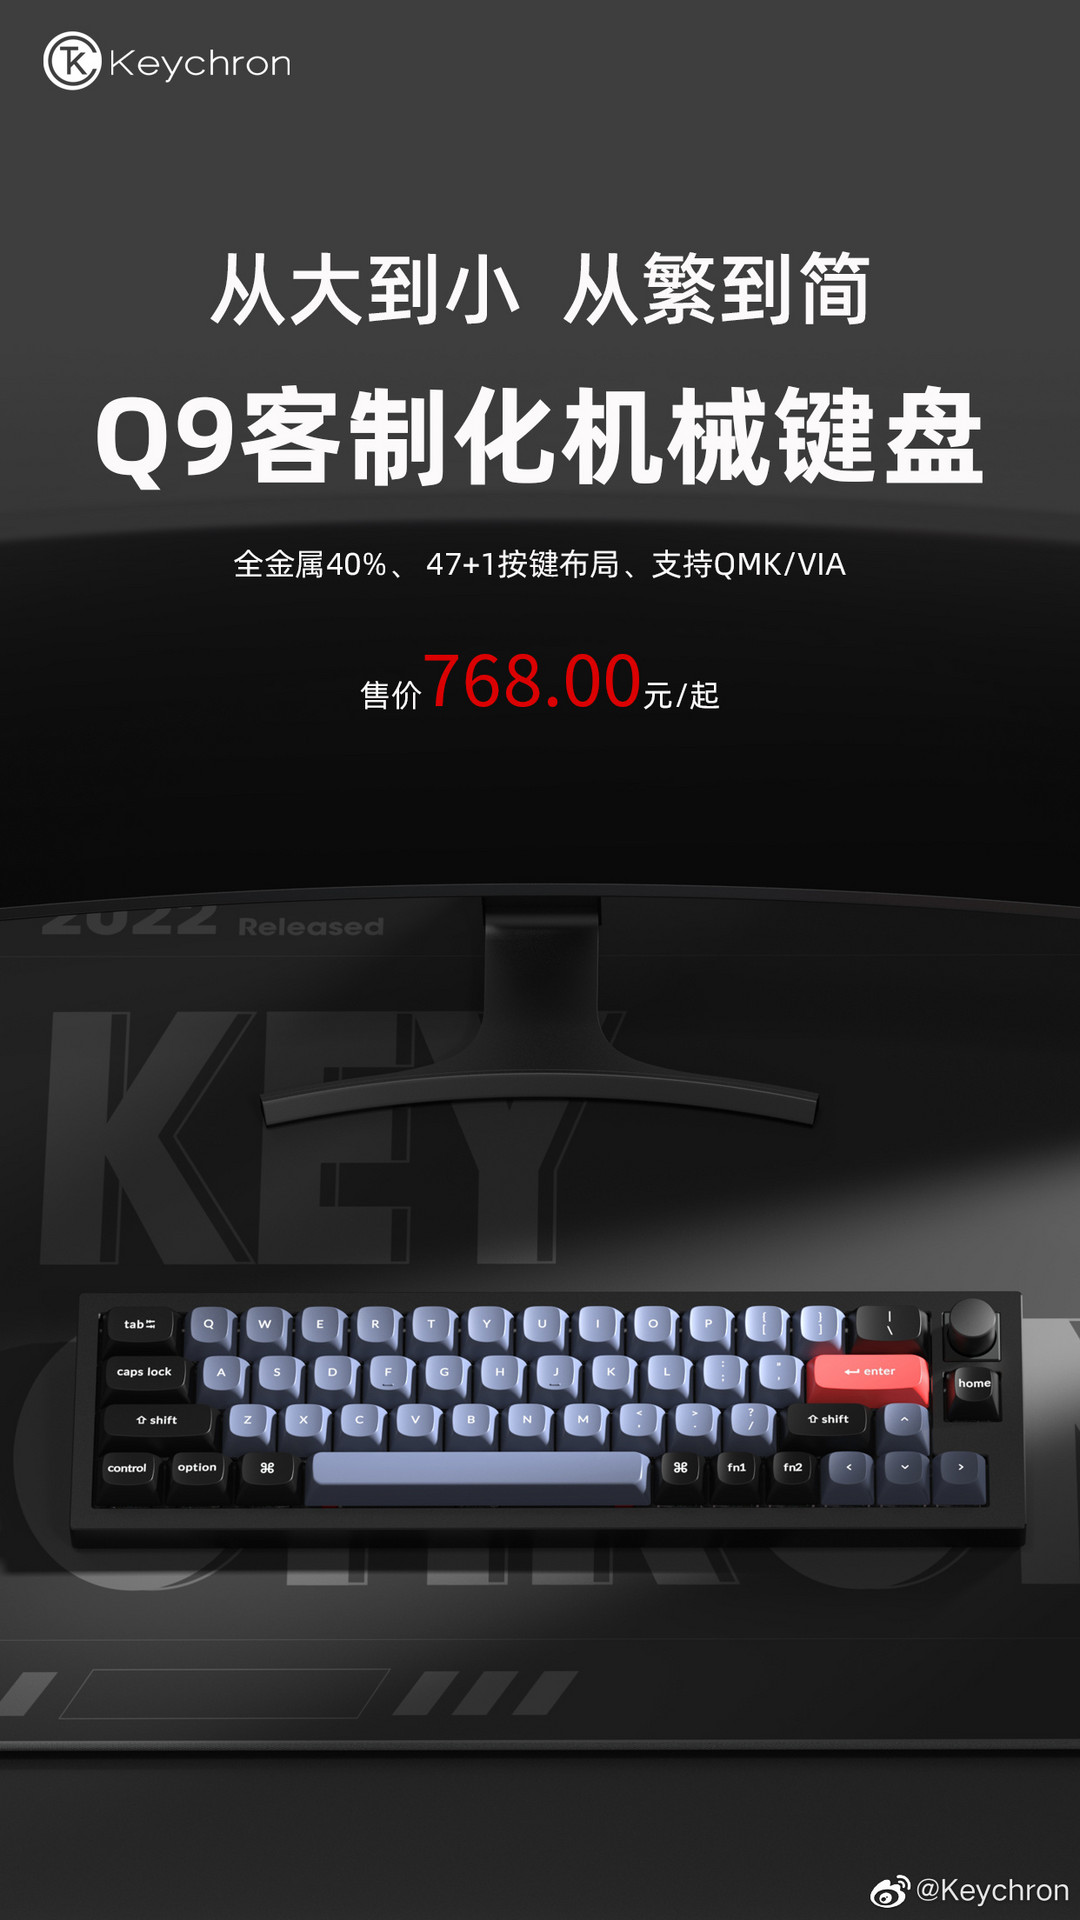 Keychron 推出 Q9 mini 客制化机械键盘：40%配列、支持QMK/VIA